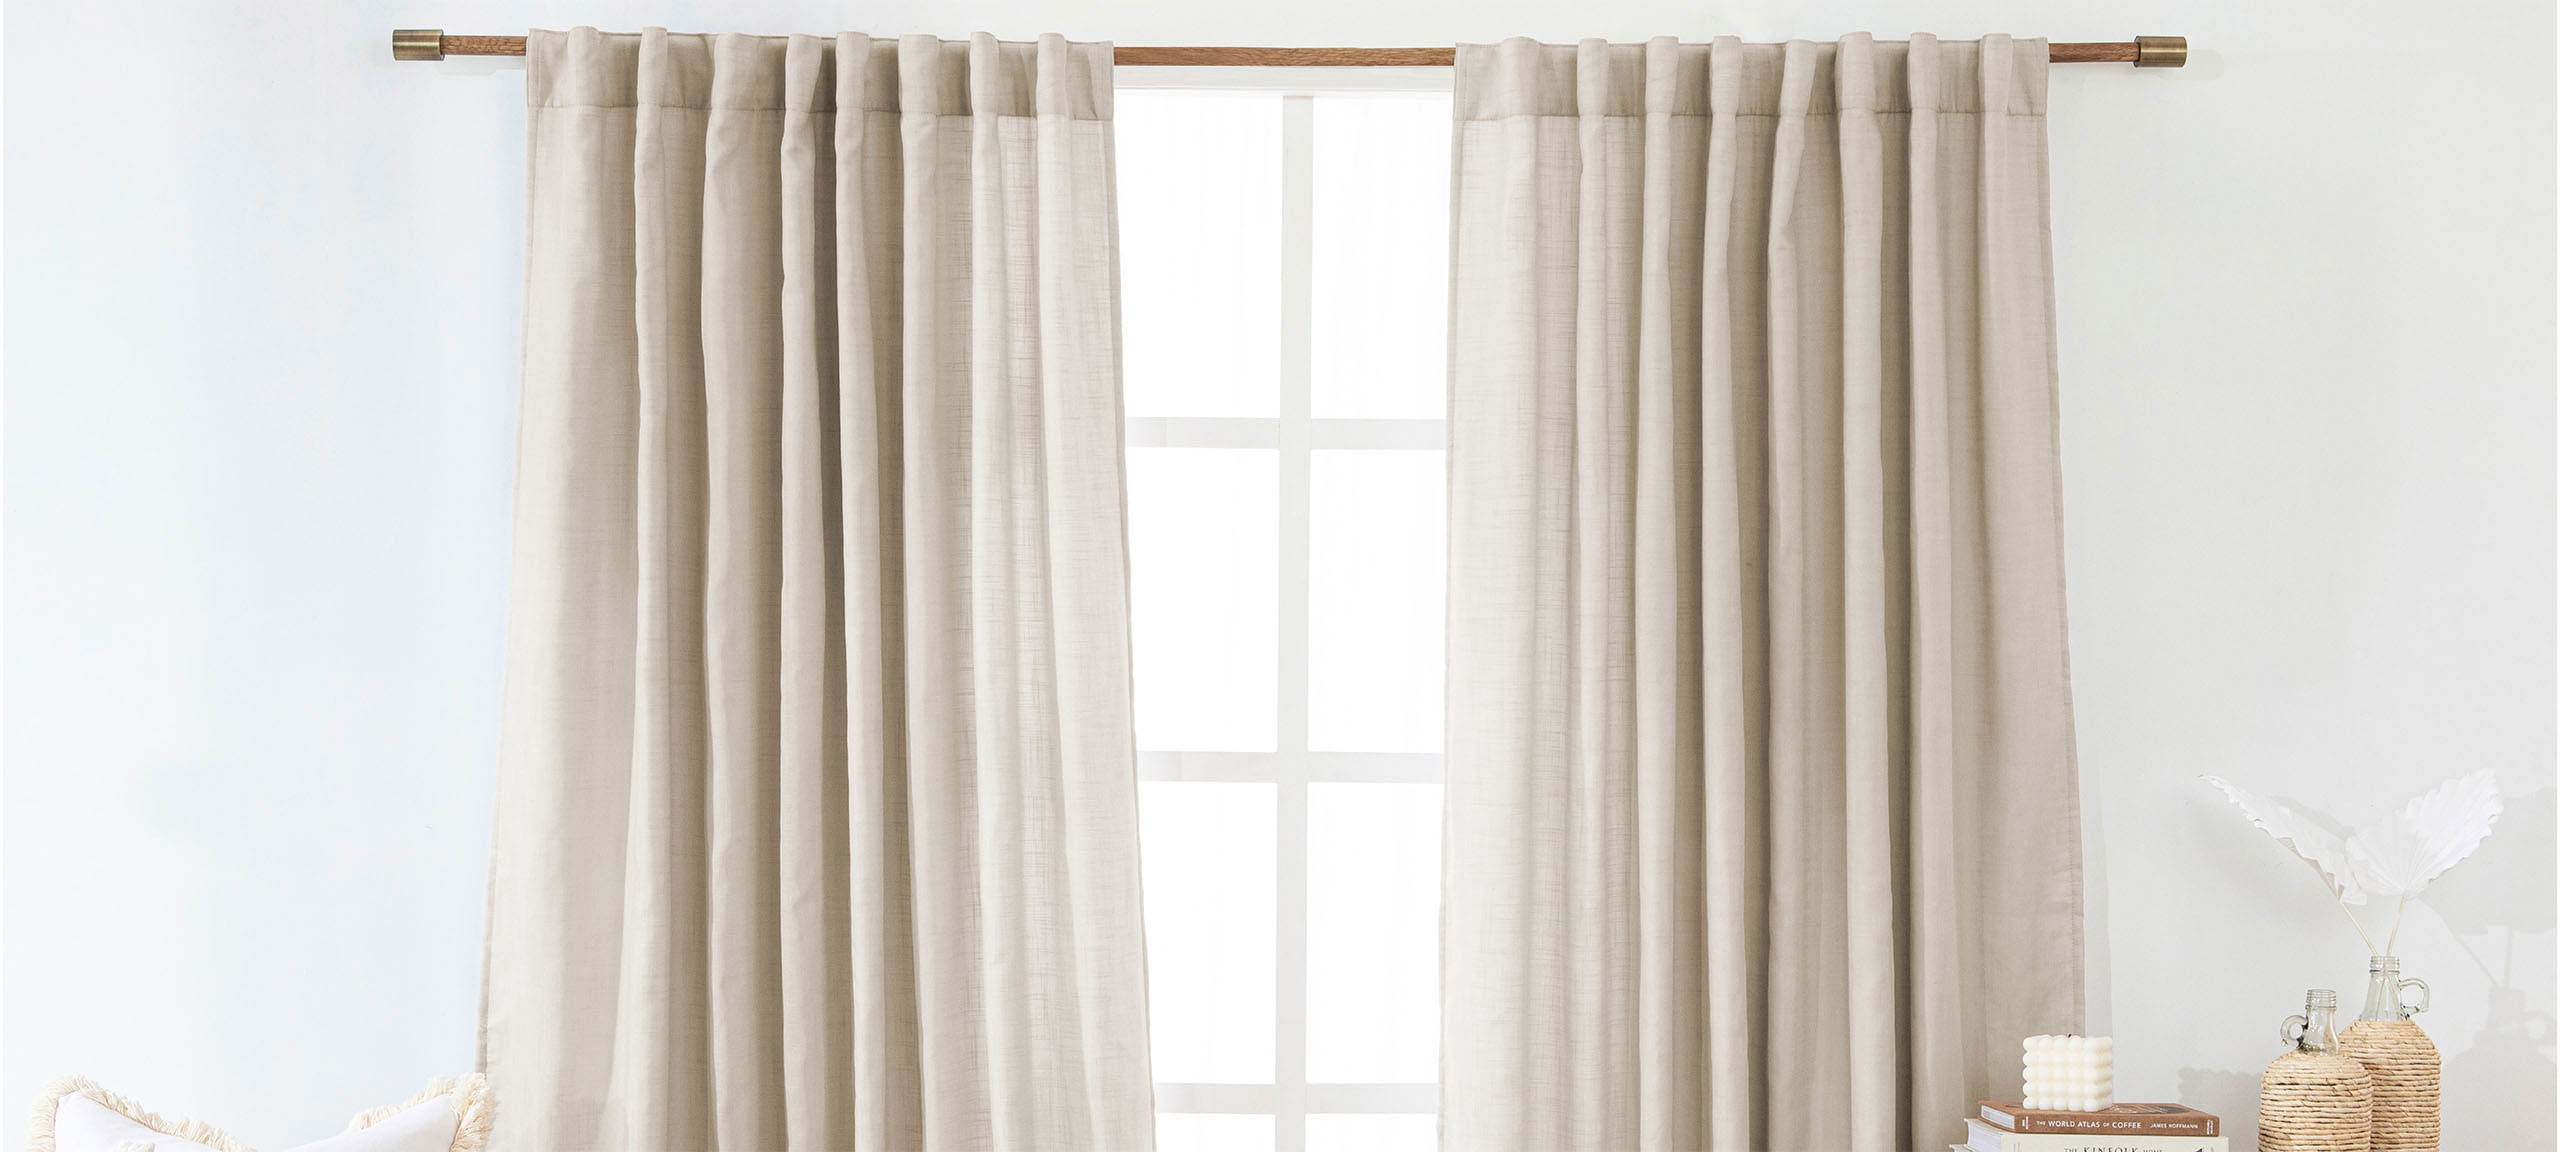 Pillow Talk curtains